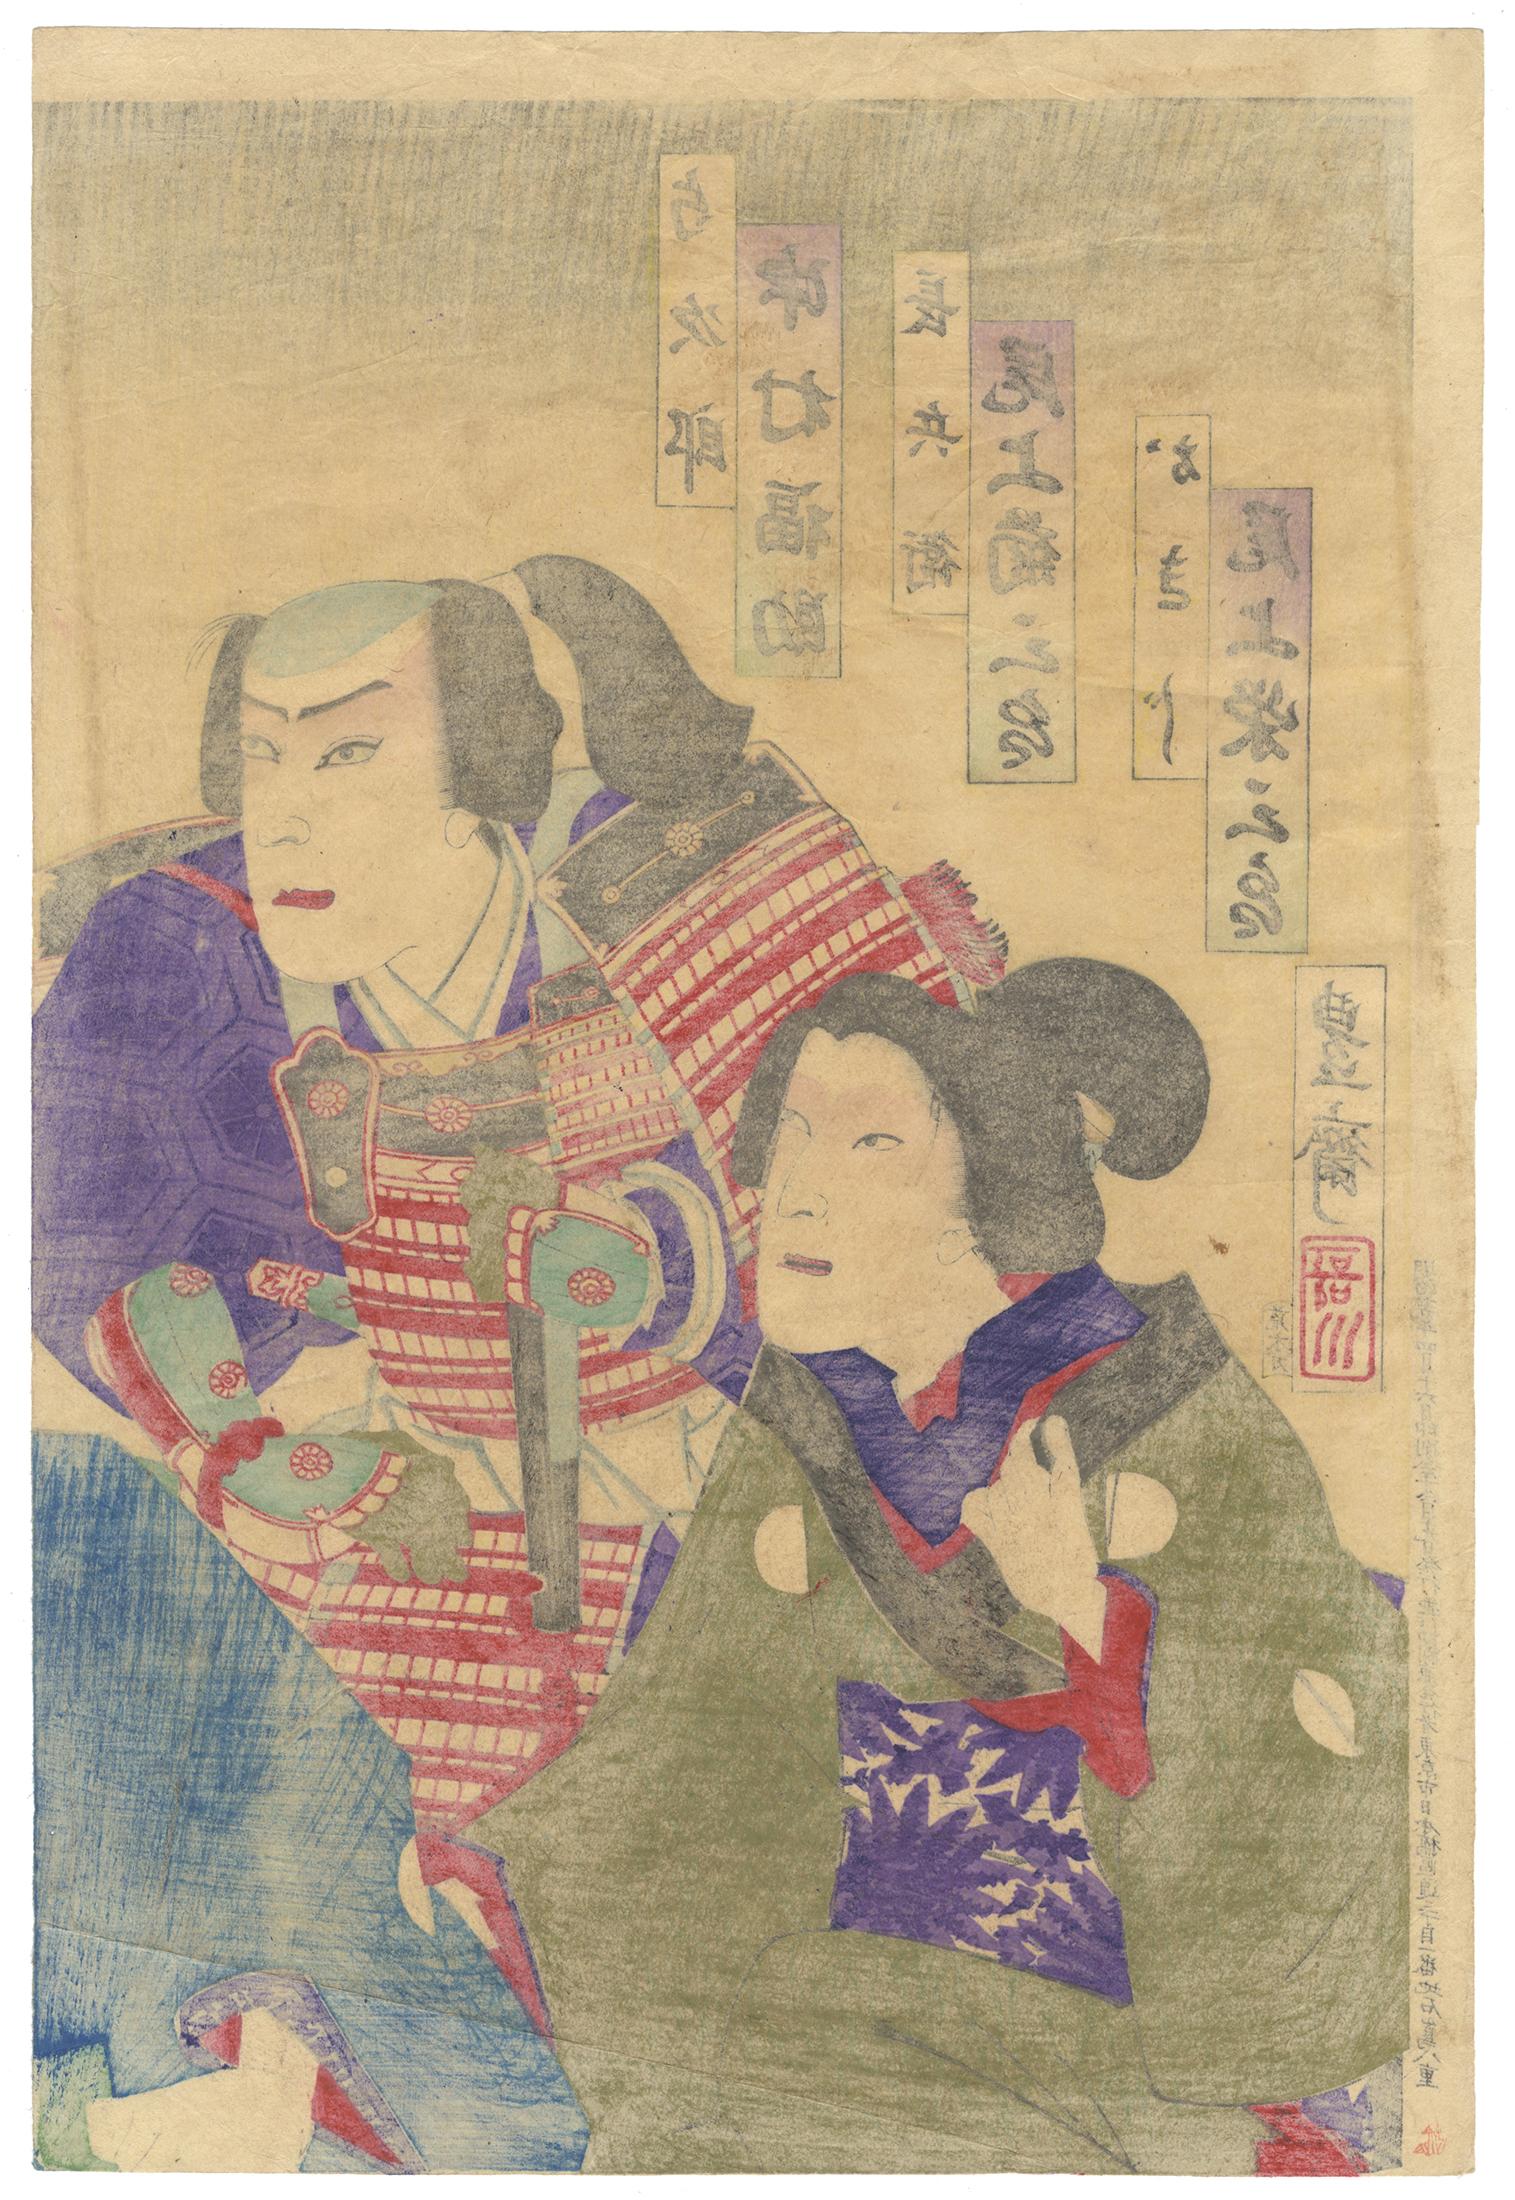 Artist: Utagawa Kunisada III (1848-1920) [signed as Hosai]
Title: Akechi Samanosuke, a New Kabuki Play at the Meiji Theatre
Publisher: Ishijima Yae
Date: 1896
Dimensions: (L) 24.9 x 36.9 (C) 24.9 x 37 (R) 24.9 x 36.8 cm
Condition: Pinhole. Minor